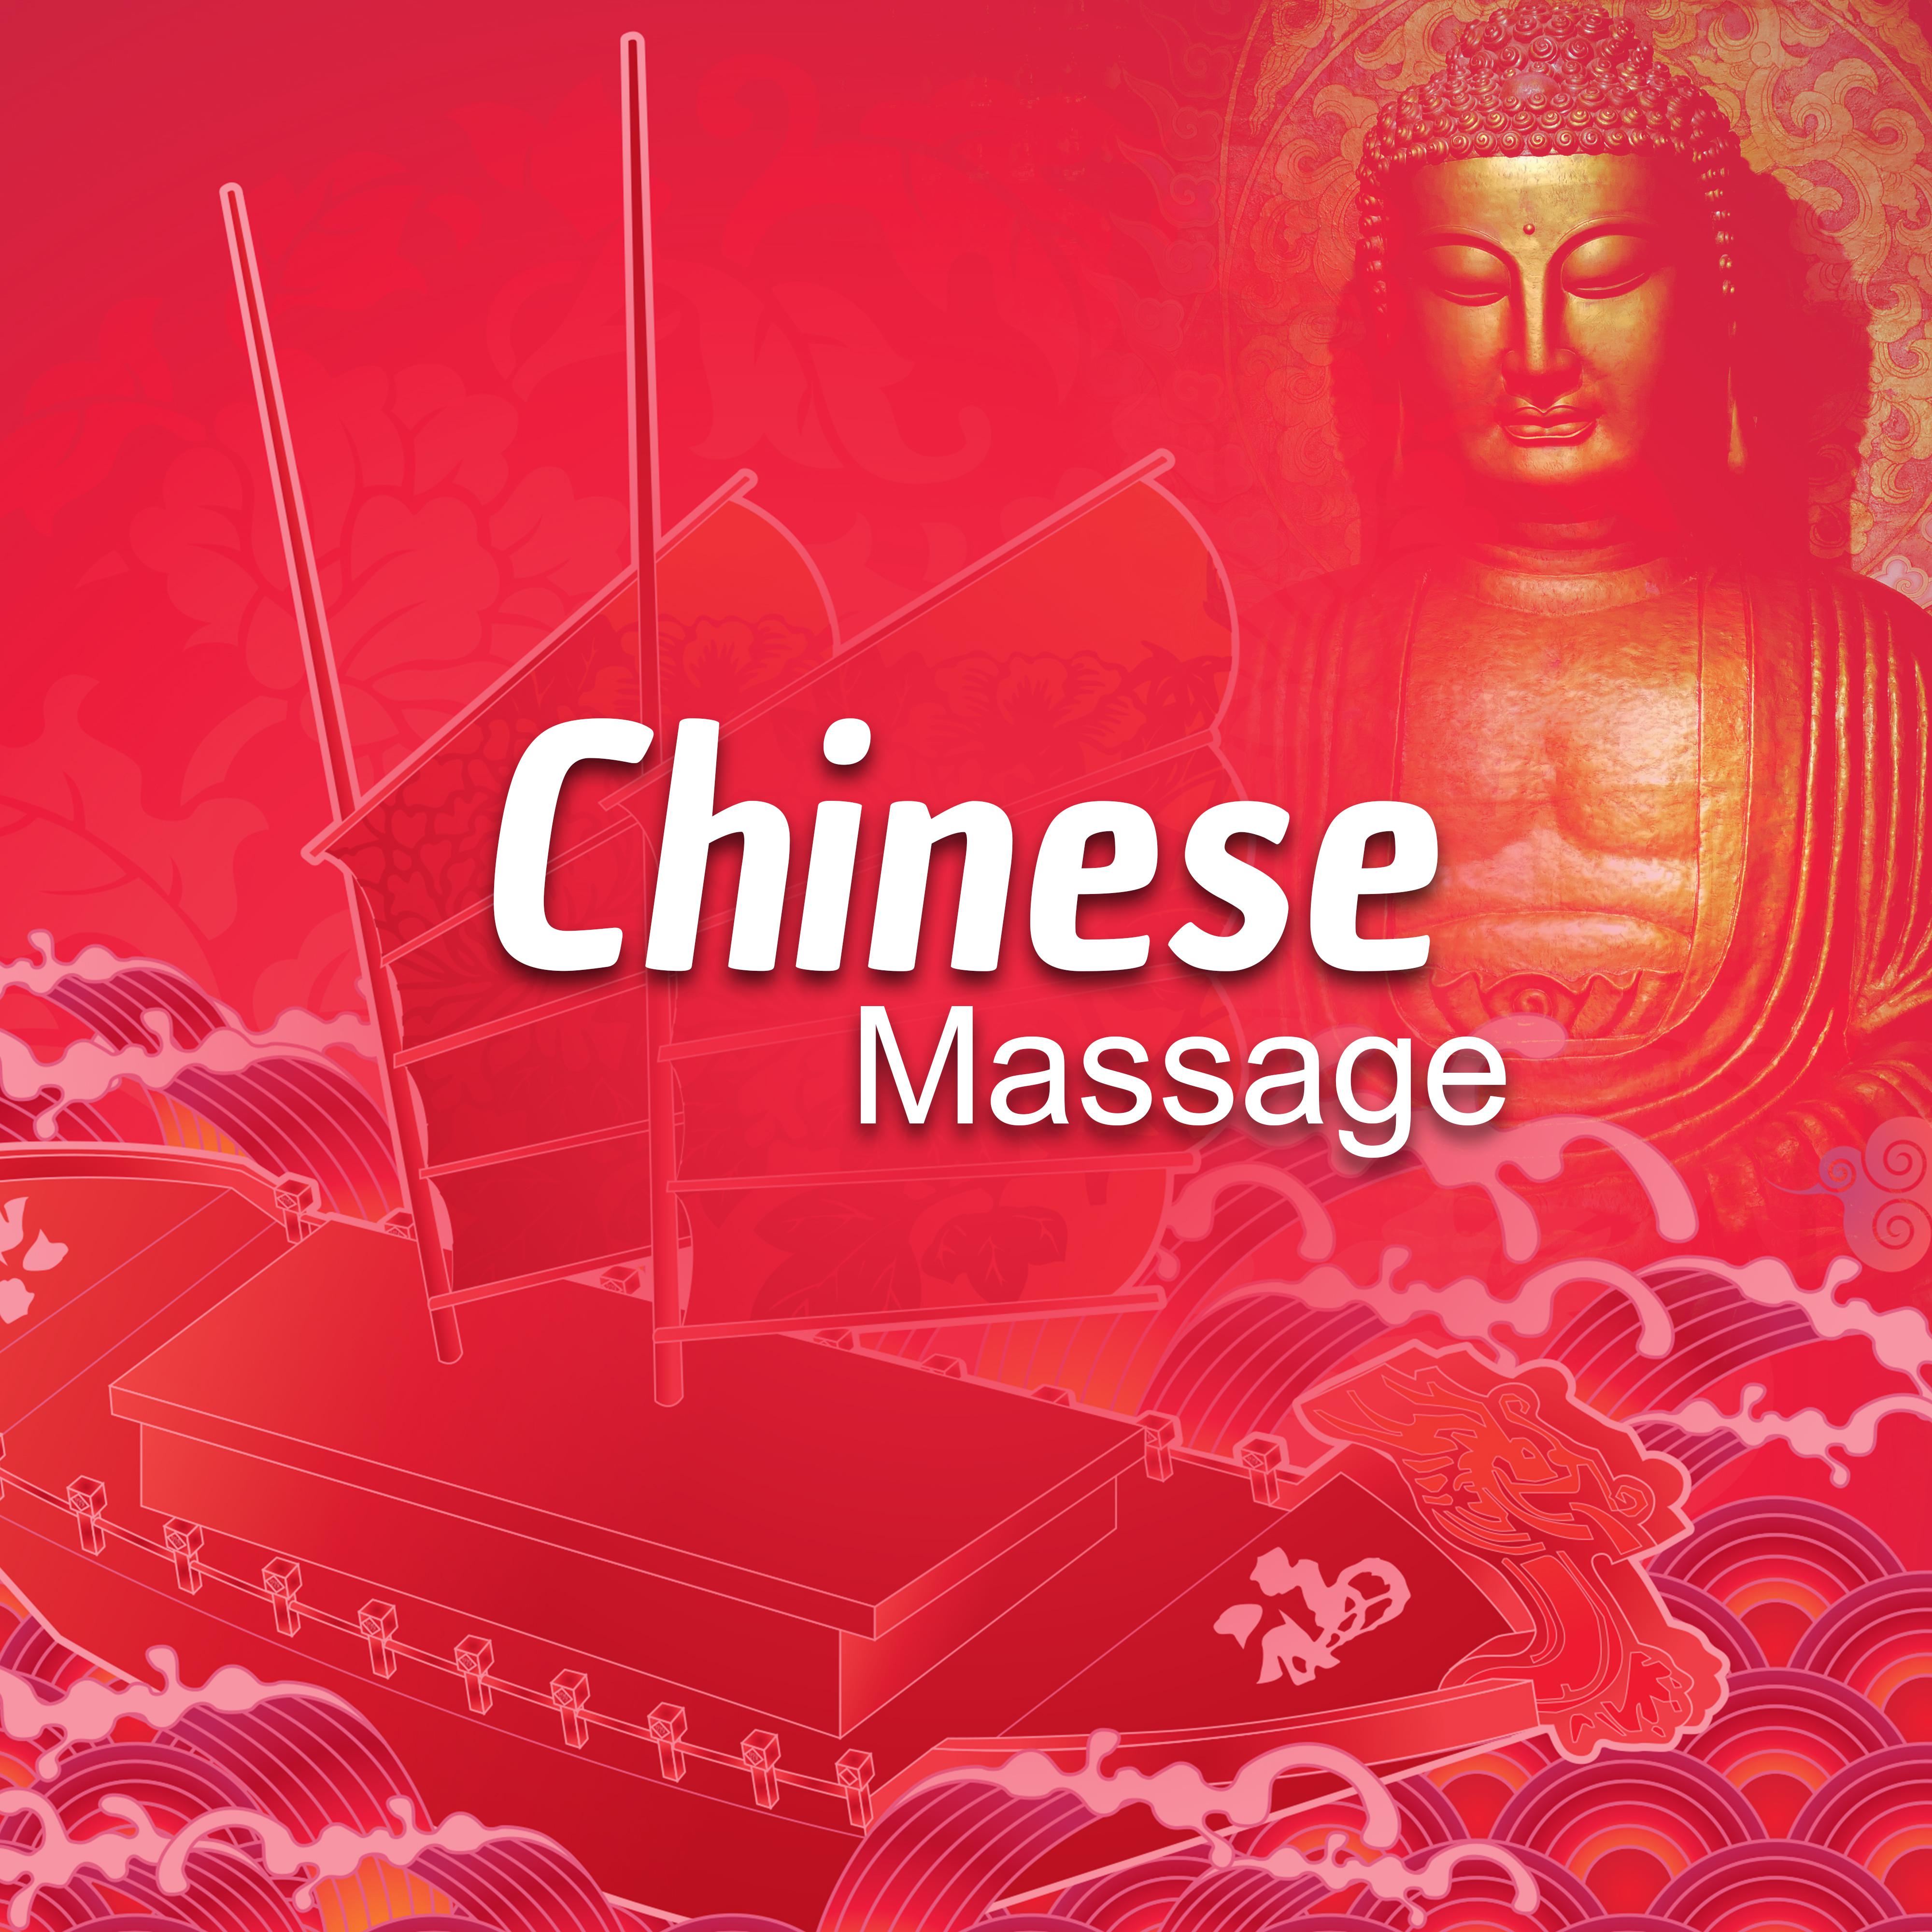 Chinese Massage – Zen Spa, Inner Bliss, Massage Music, Therapy for Body, Nature Sounds, Kundalini Zen